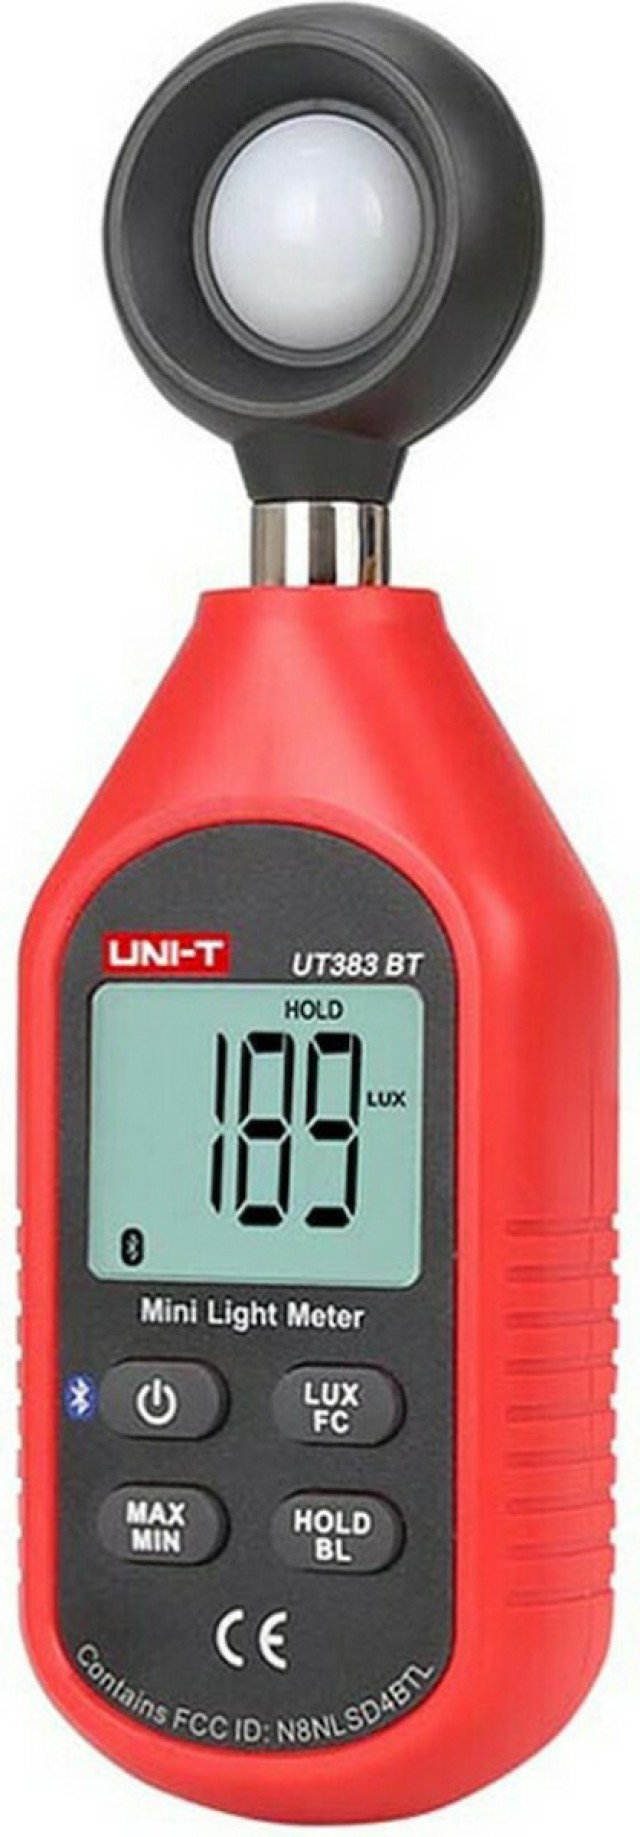 UNI-T light meter LUX UT383 BT, Bluetooth